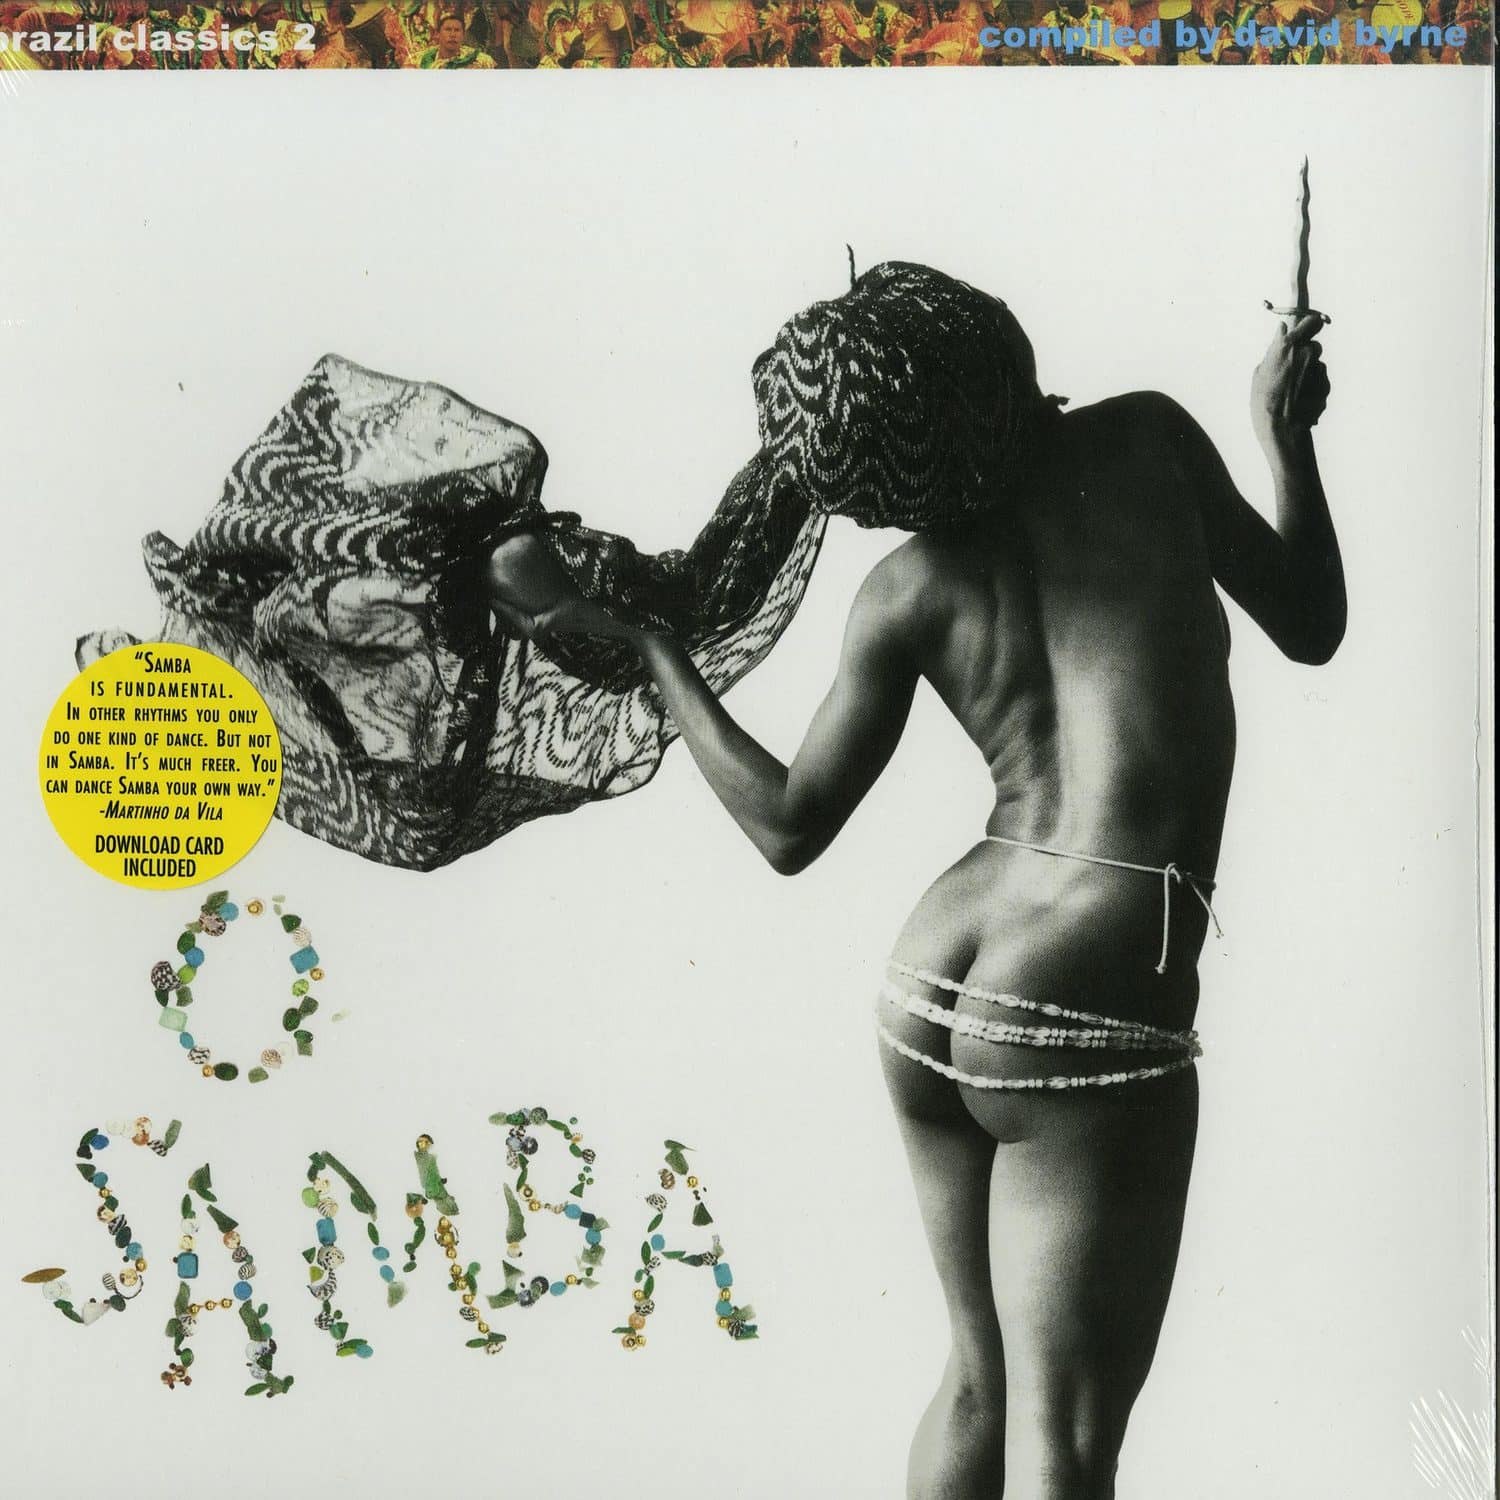 V/A Compiled by David Byrne - BRAZIL CLASSICS 2: O SAMBA 